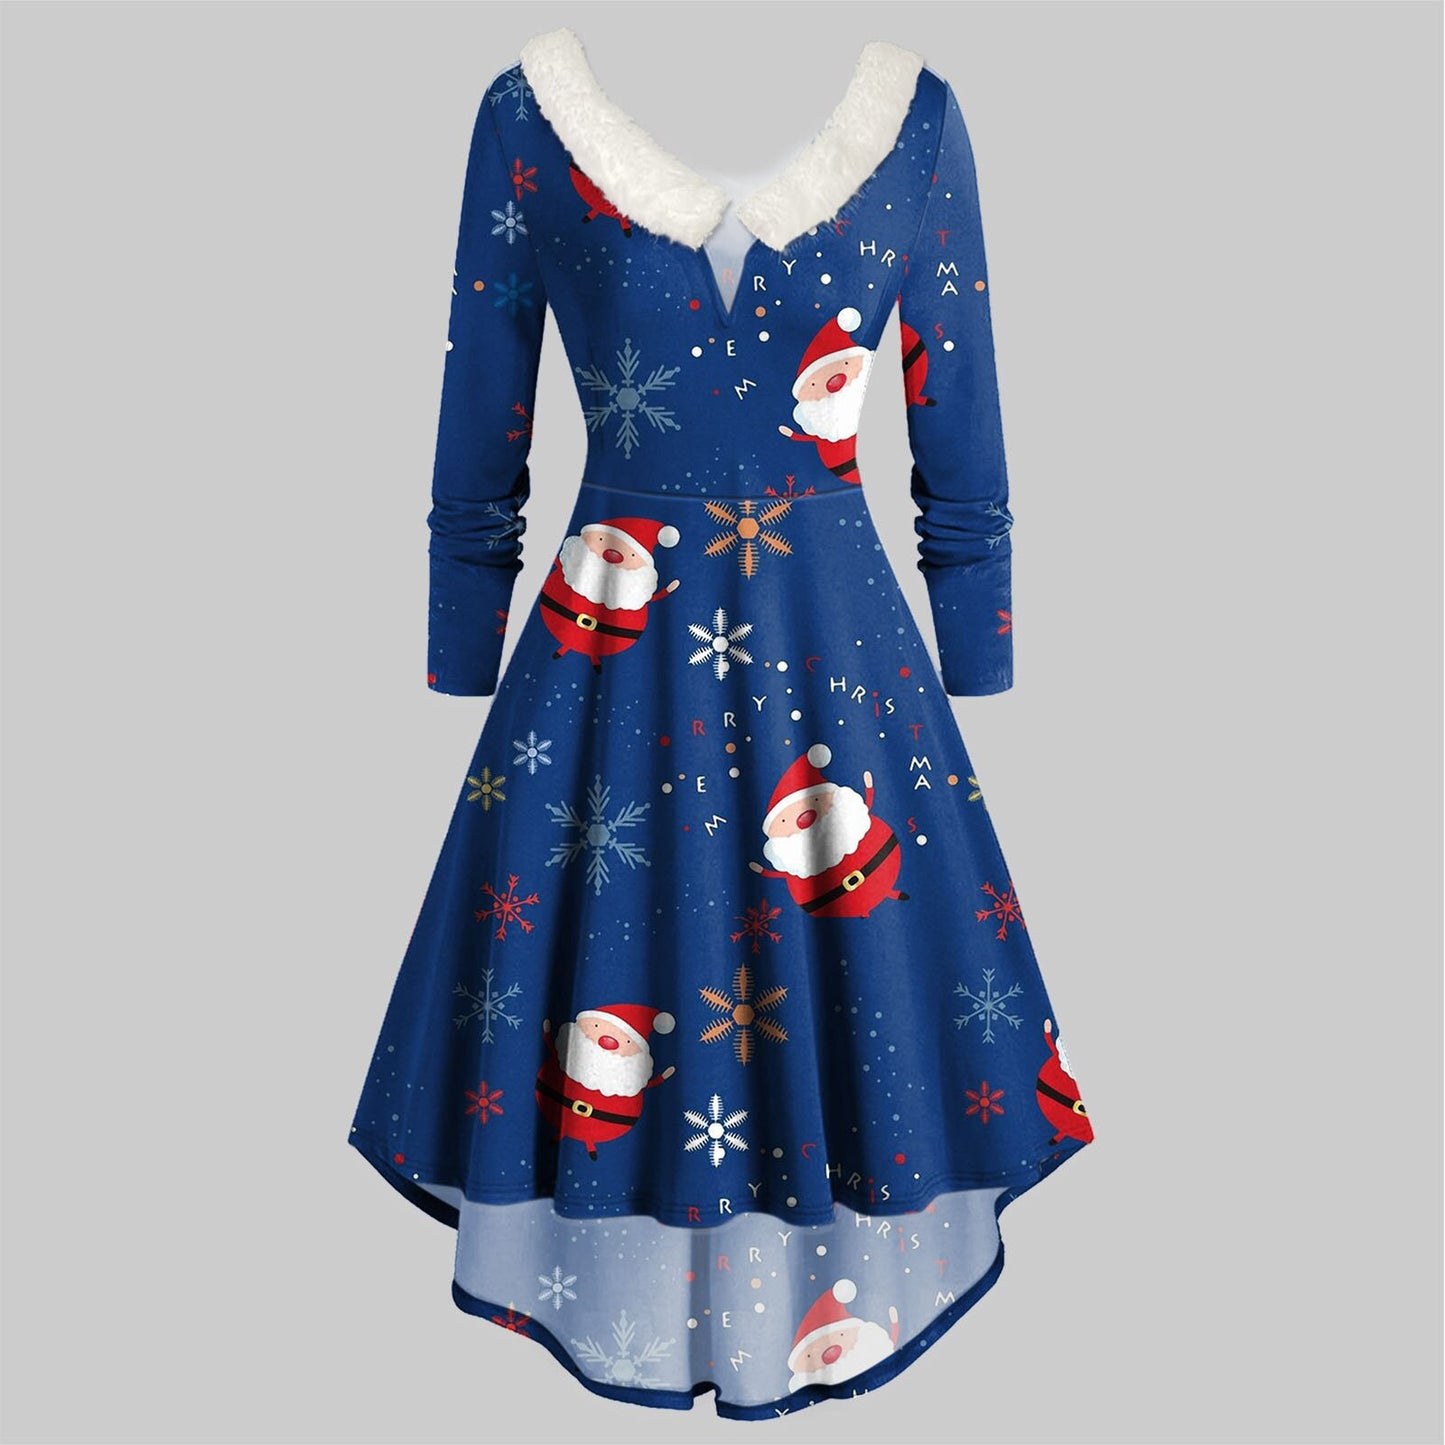 Christmas Dresses For Women Furry V Neck Swing Dress High Low Party Dress Long Sleeve Xmas Print Dresses Female Vestido Clothes